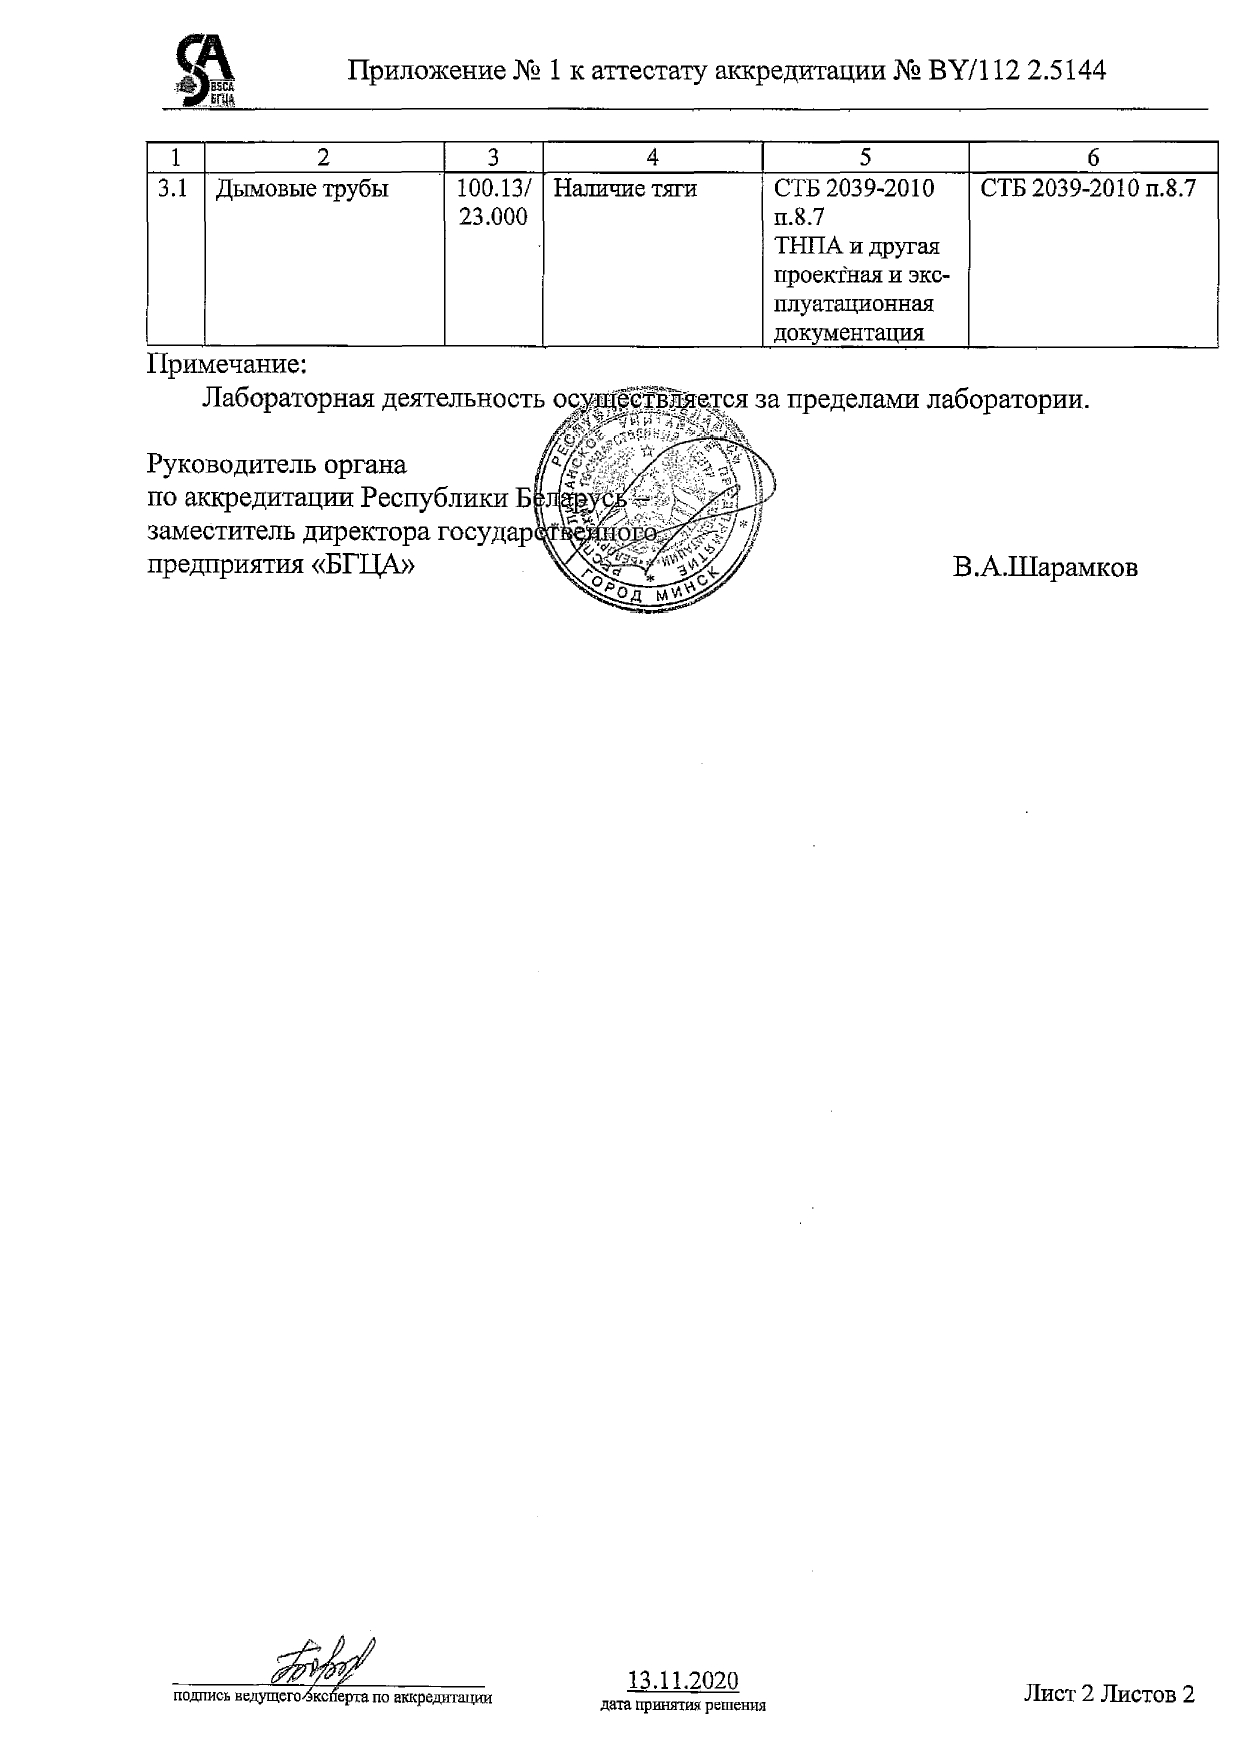 Certificate_of_accredation_laboratory3.jpg